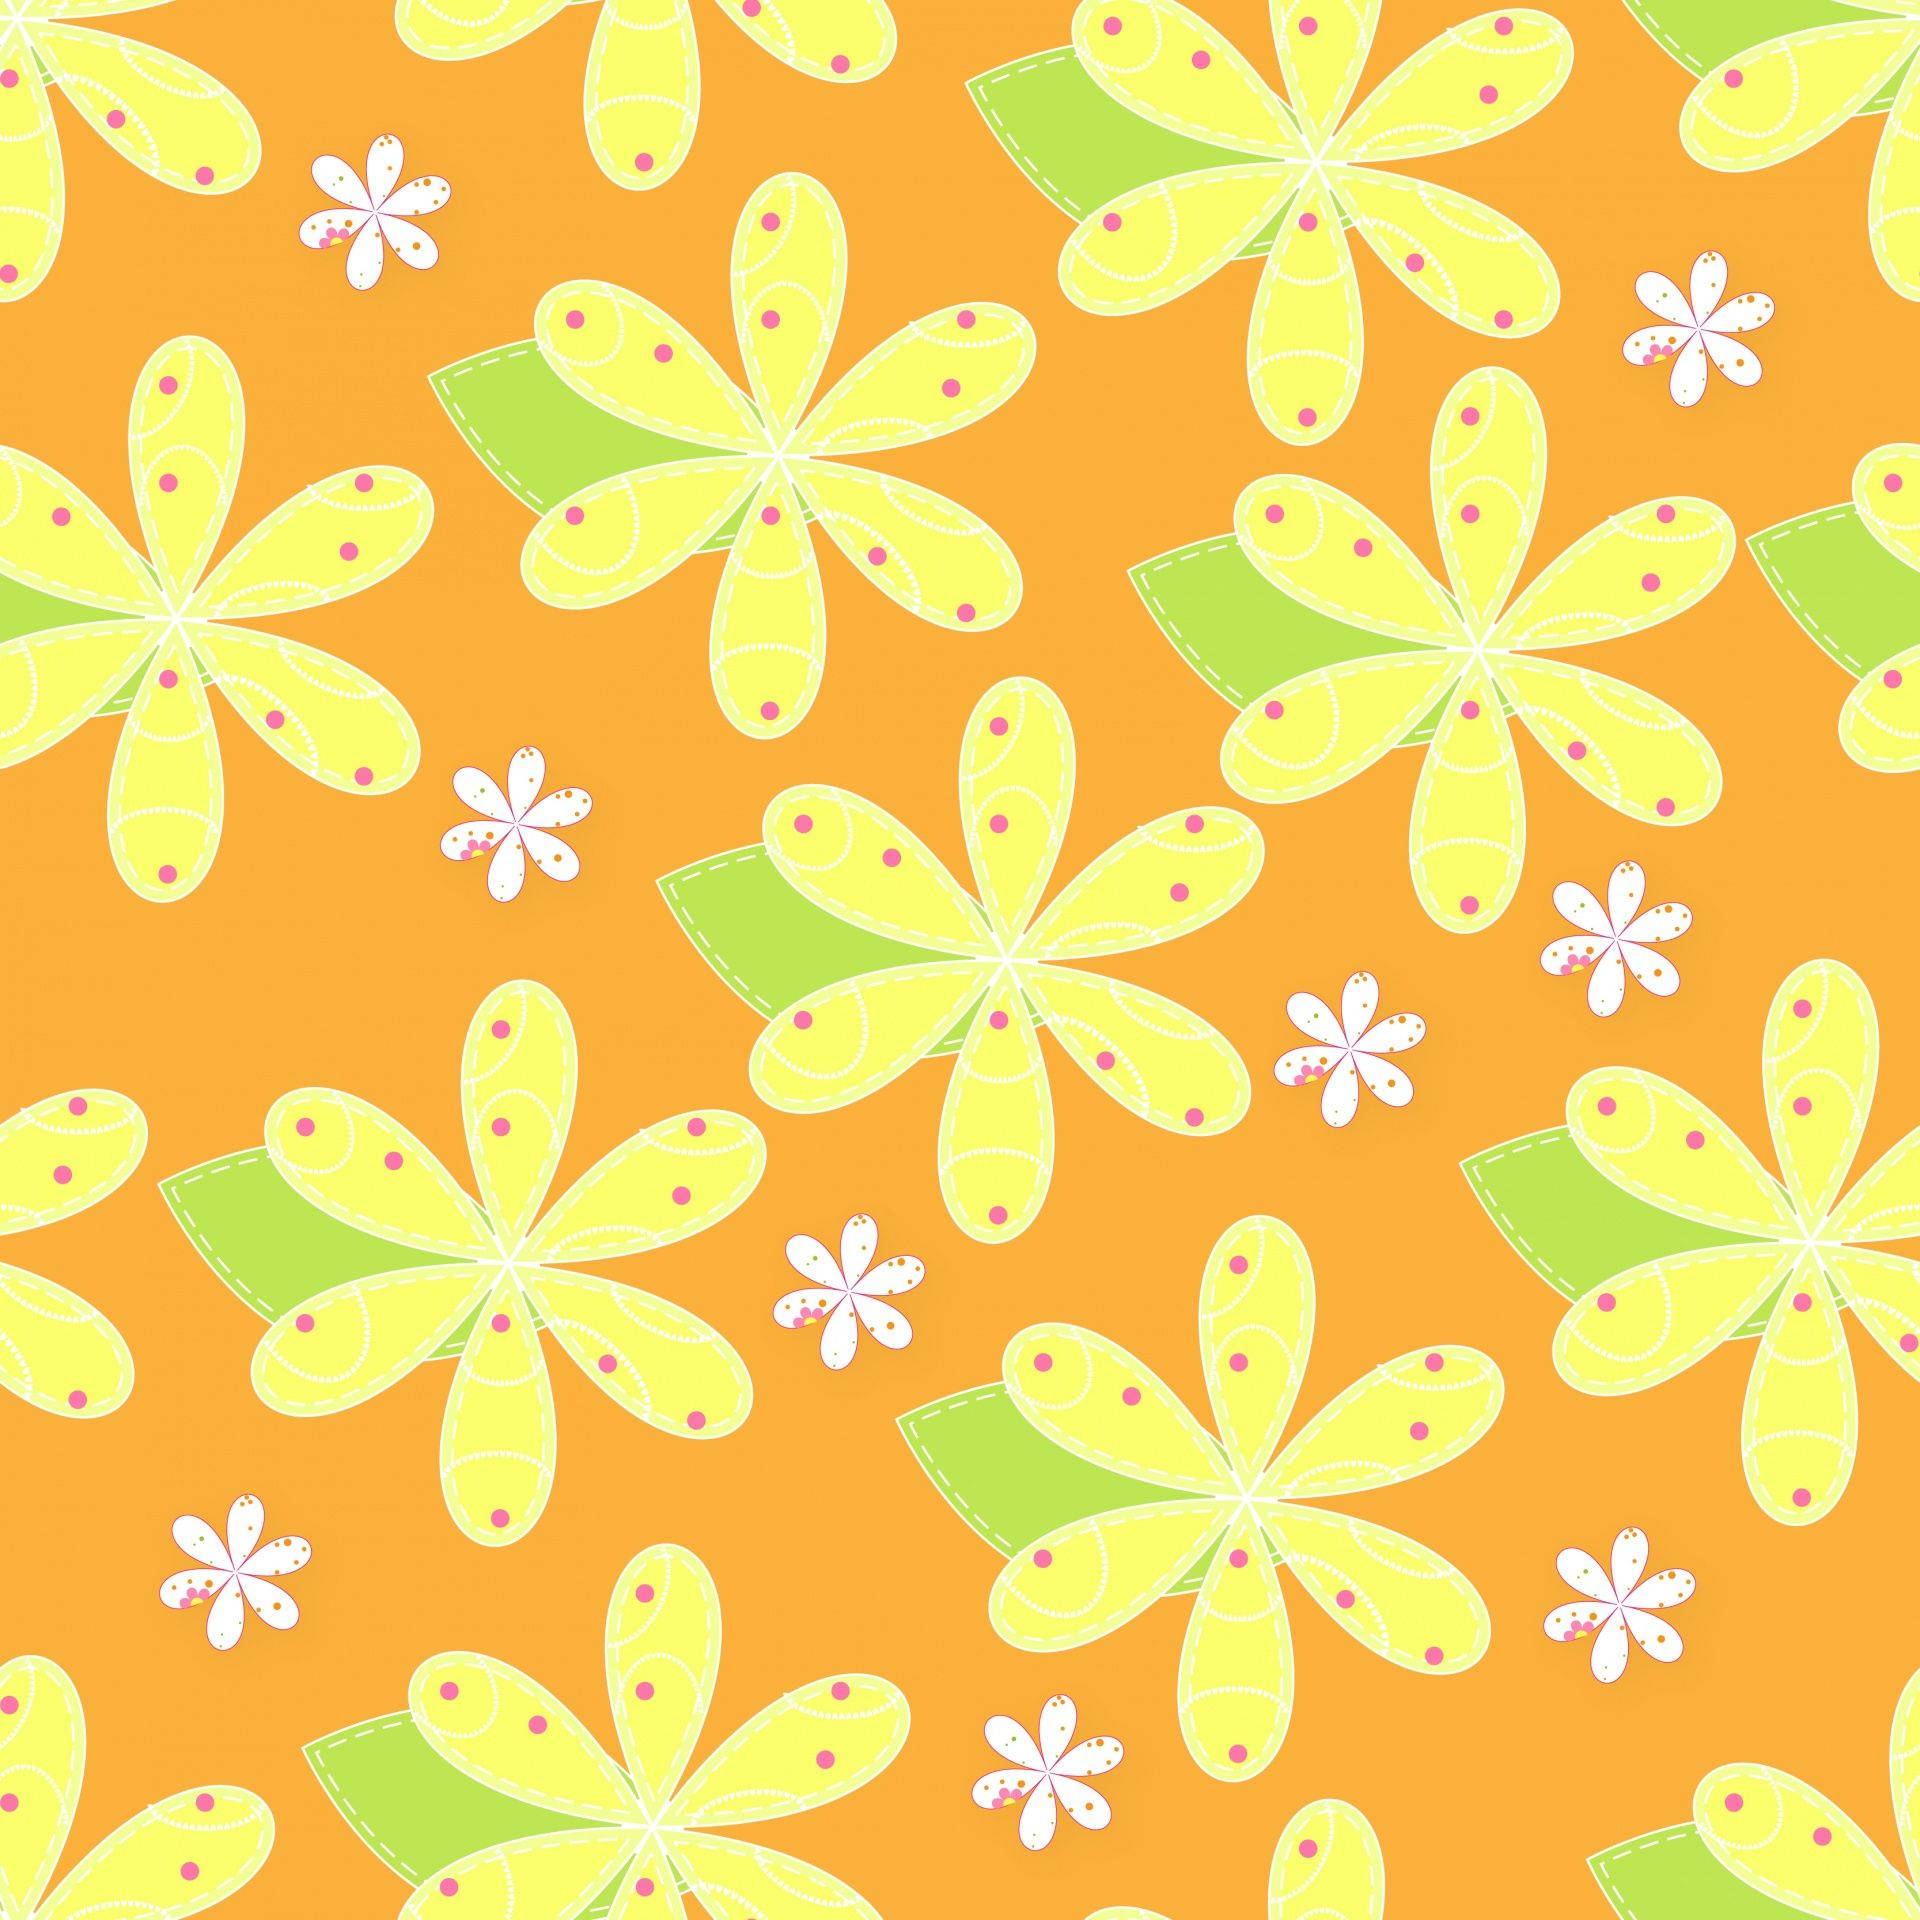 Yellow orange floral pattern background wallpaper.